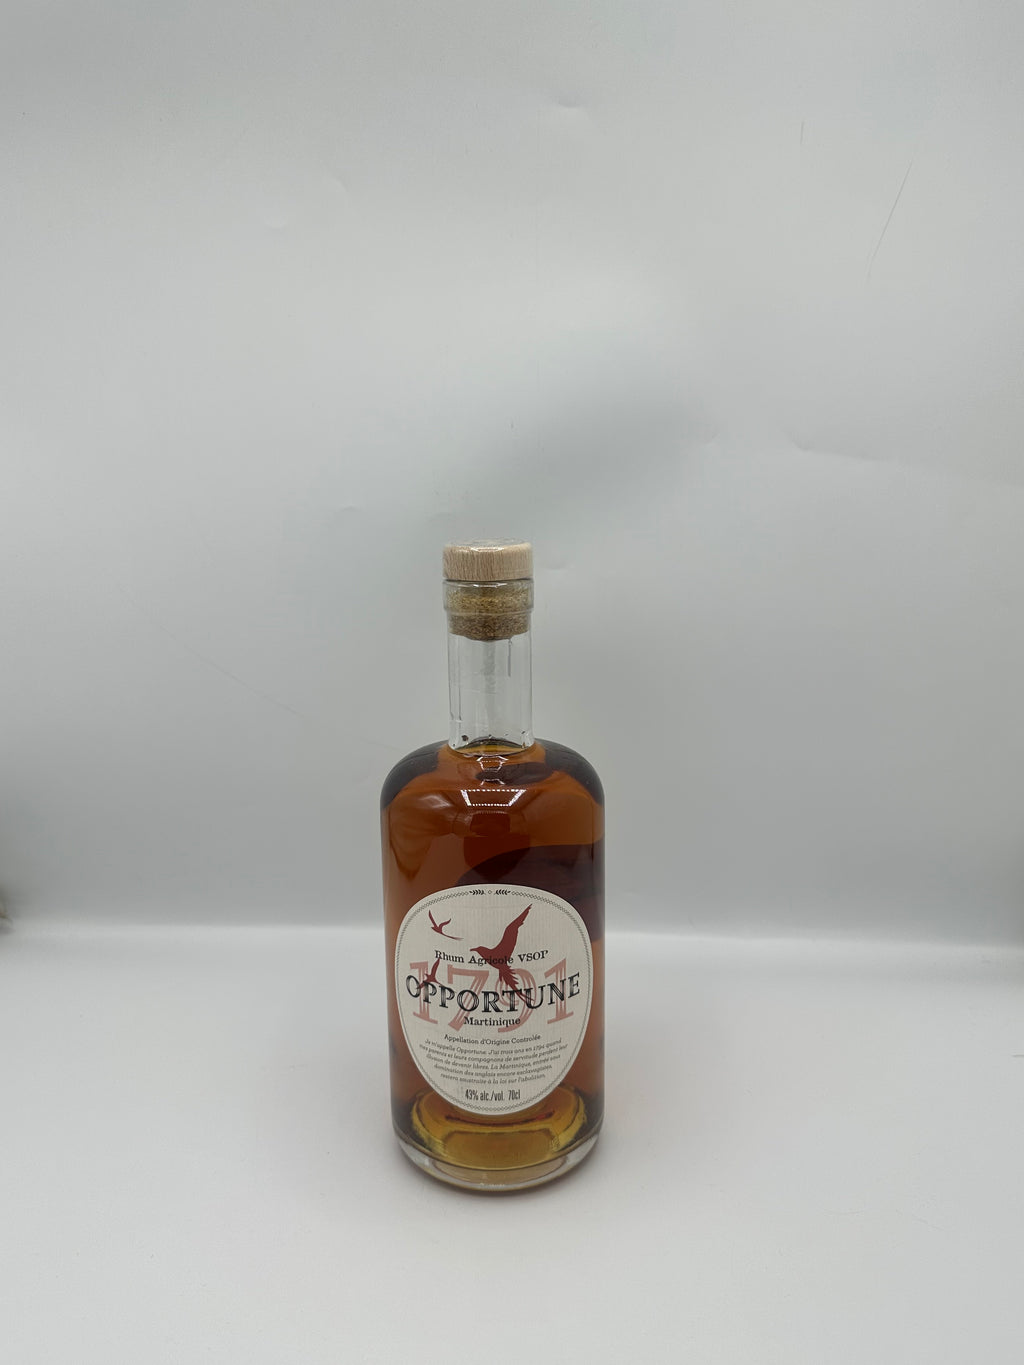 Rum Martinica VSOP 1791 - Oportuno